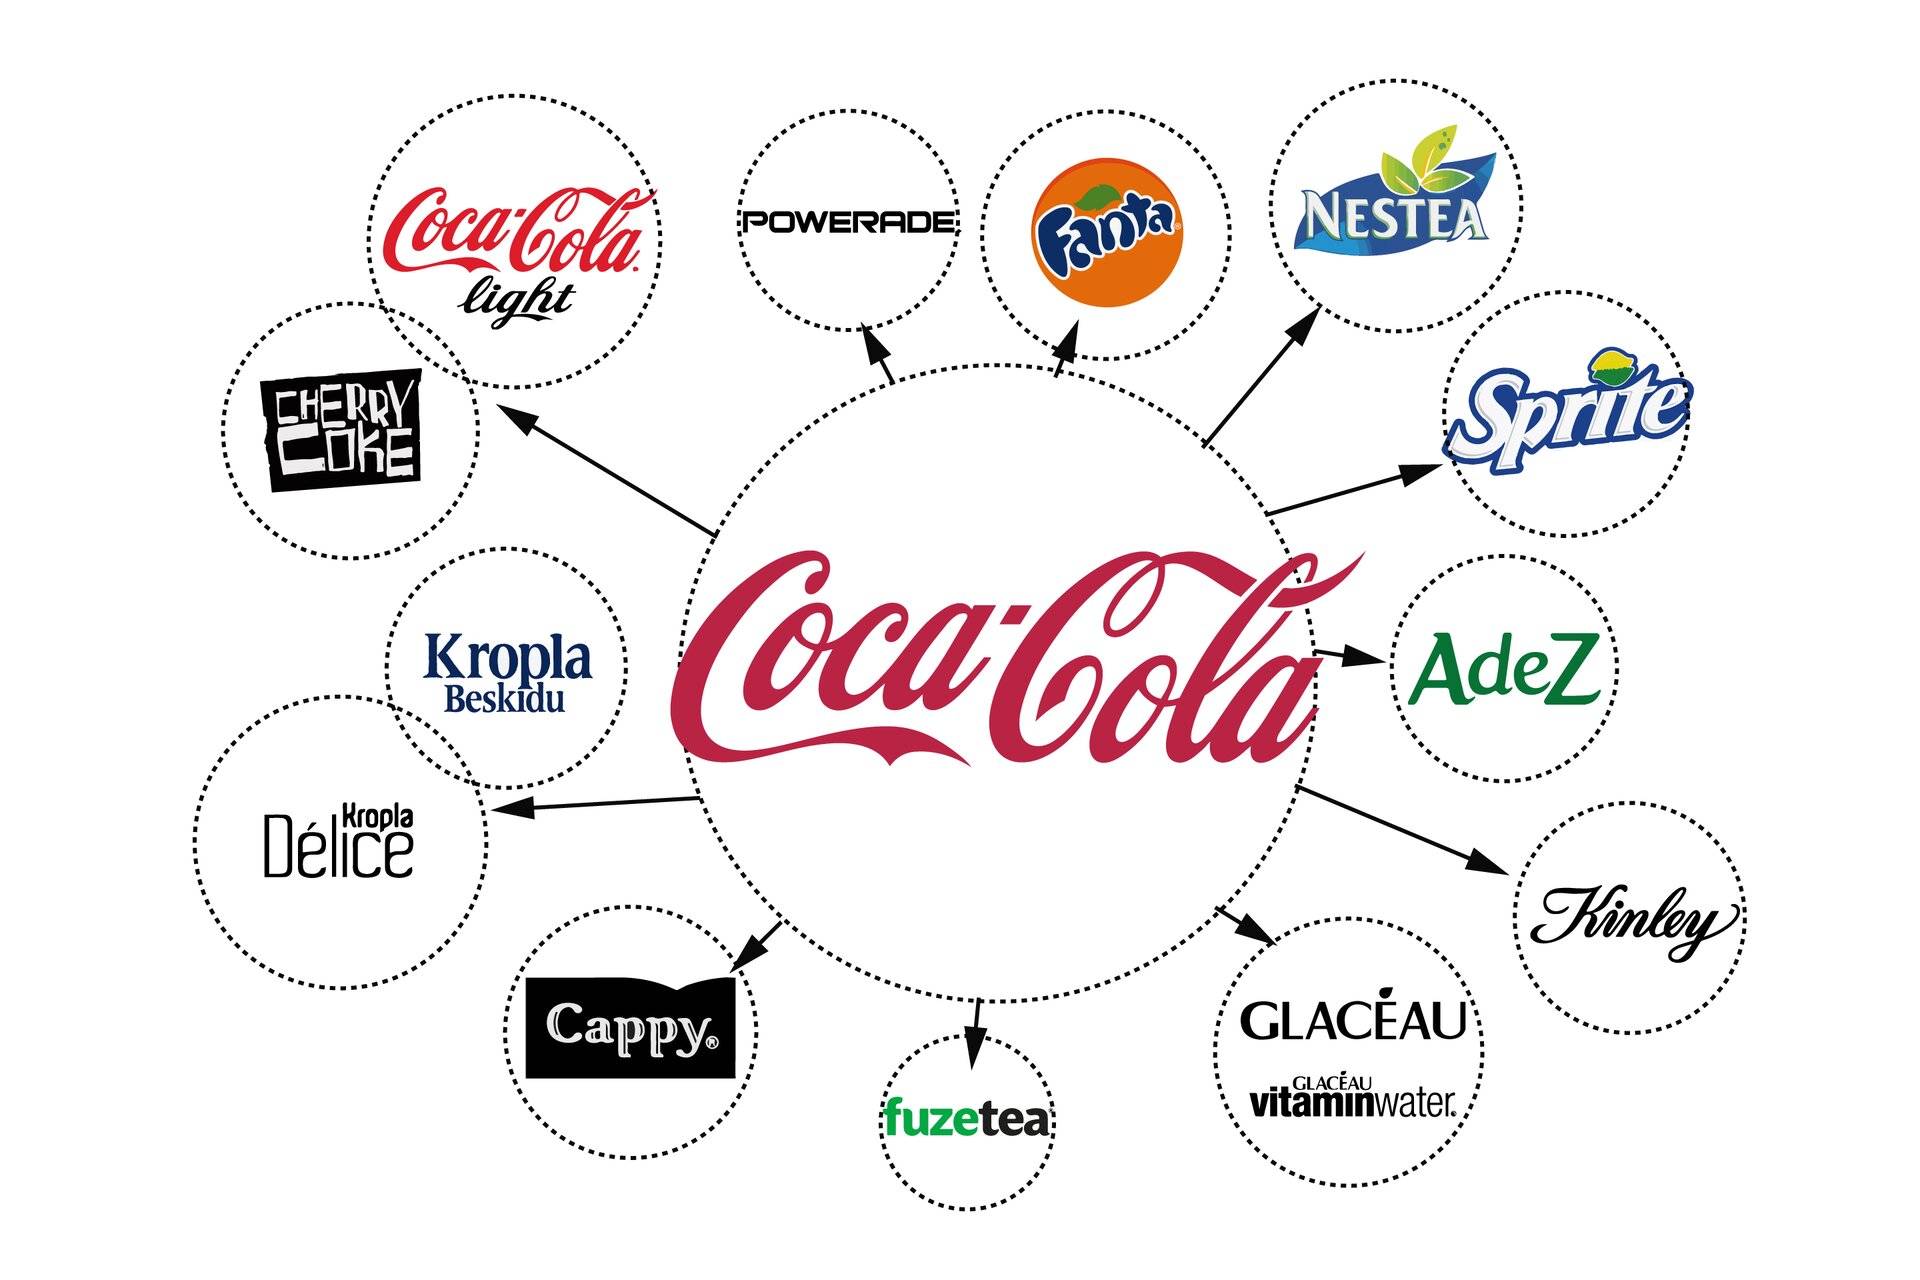 Schemat prezentuje strukturę koncernu Coca-Coli. Należą do niego marki: Coca-Cola light, Cherry Coke, Kropla Beskidu, Kropla Delice, Cappy, Fuzetea, Glaceau vitamin water, Konley, AdeZ, Sprite, Nestea, Fanta, Powerade.  